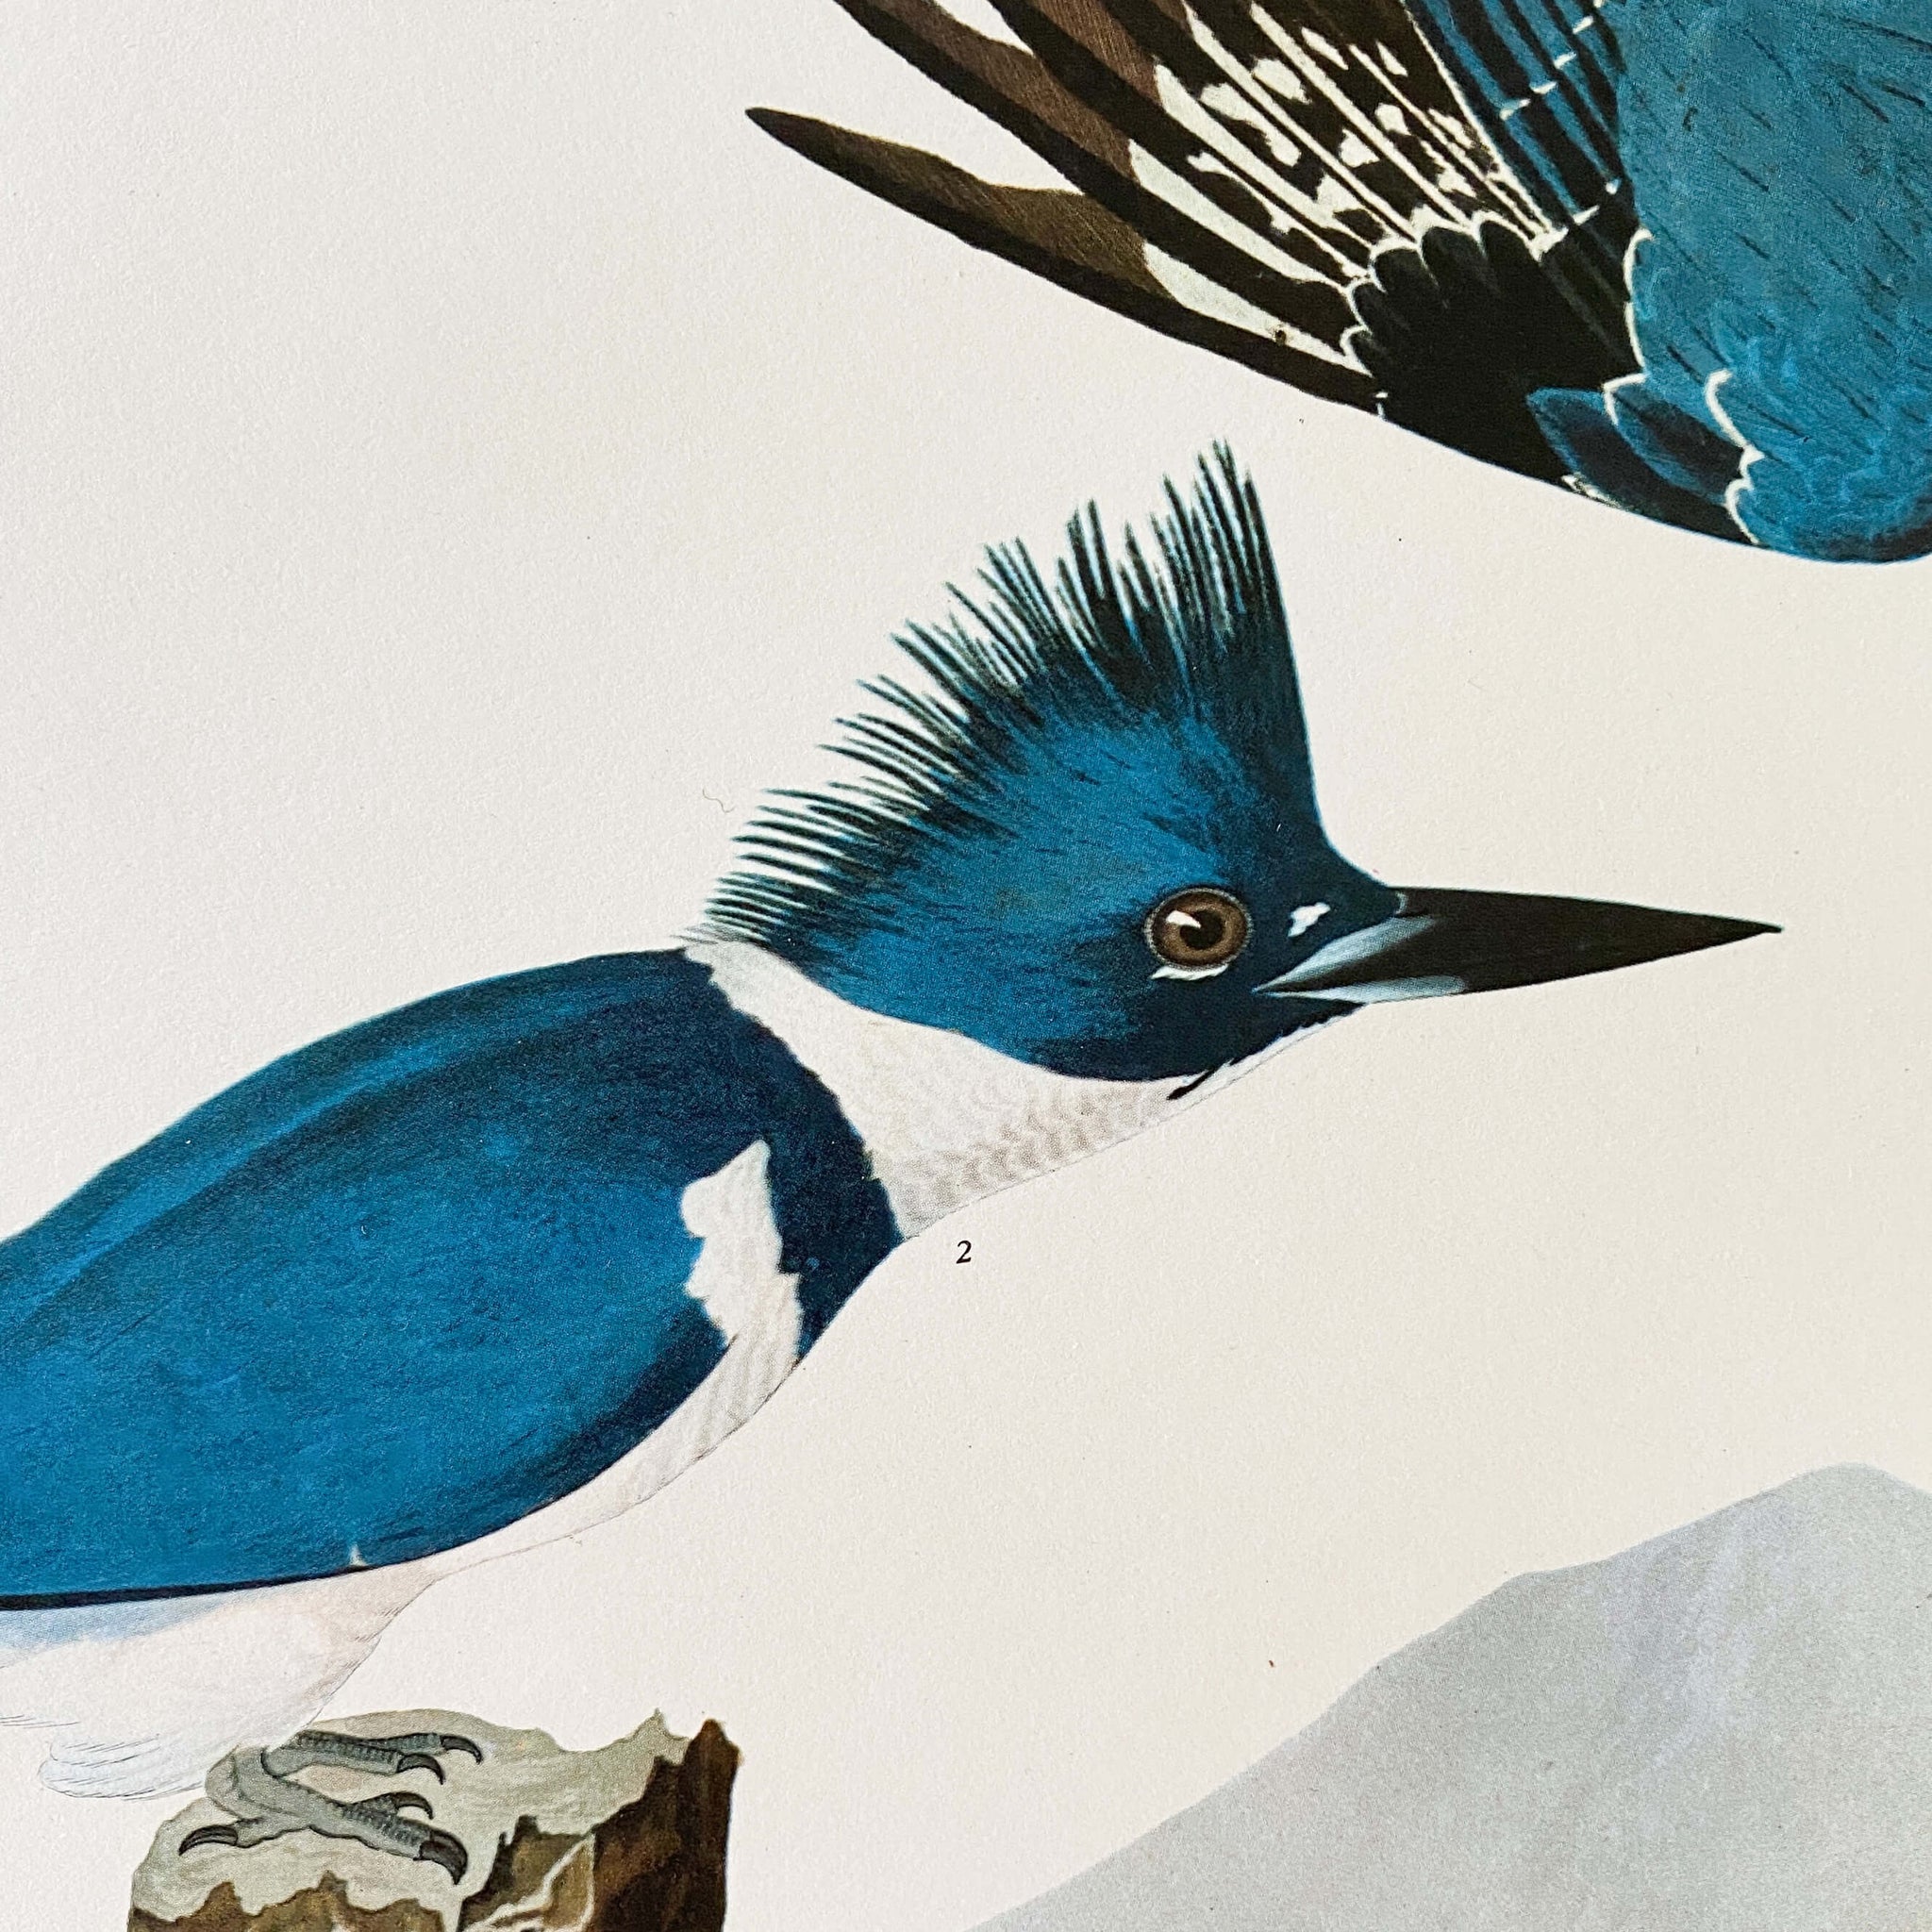 Vintage Audubon Belted Kingfisher Litlograph Print - 14x17 Audubon Folio